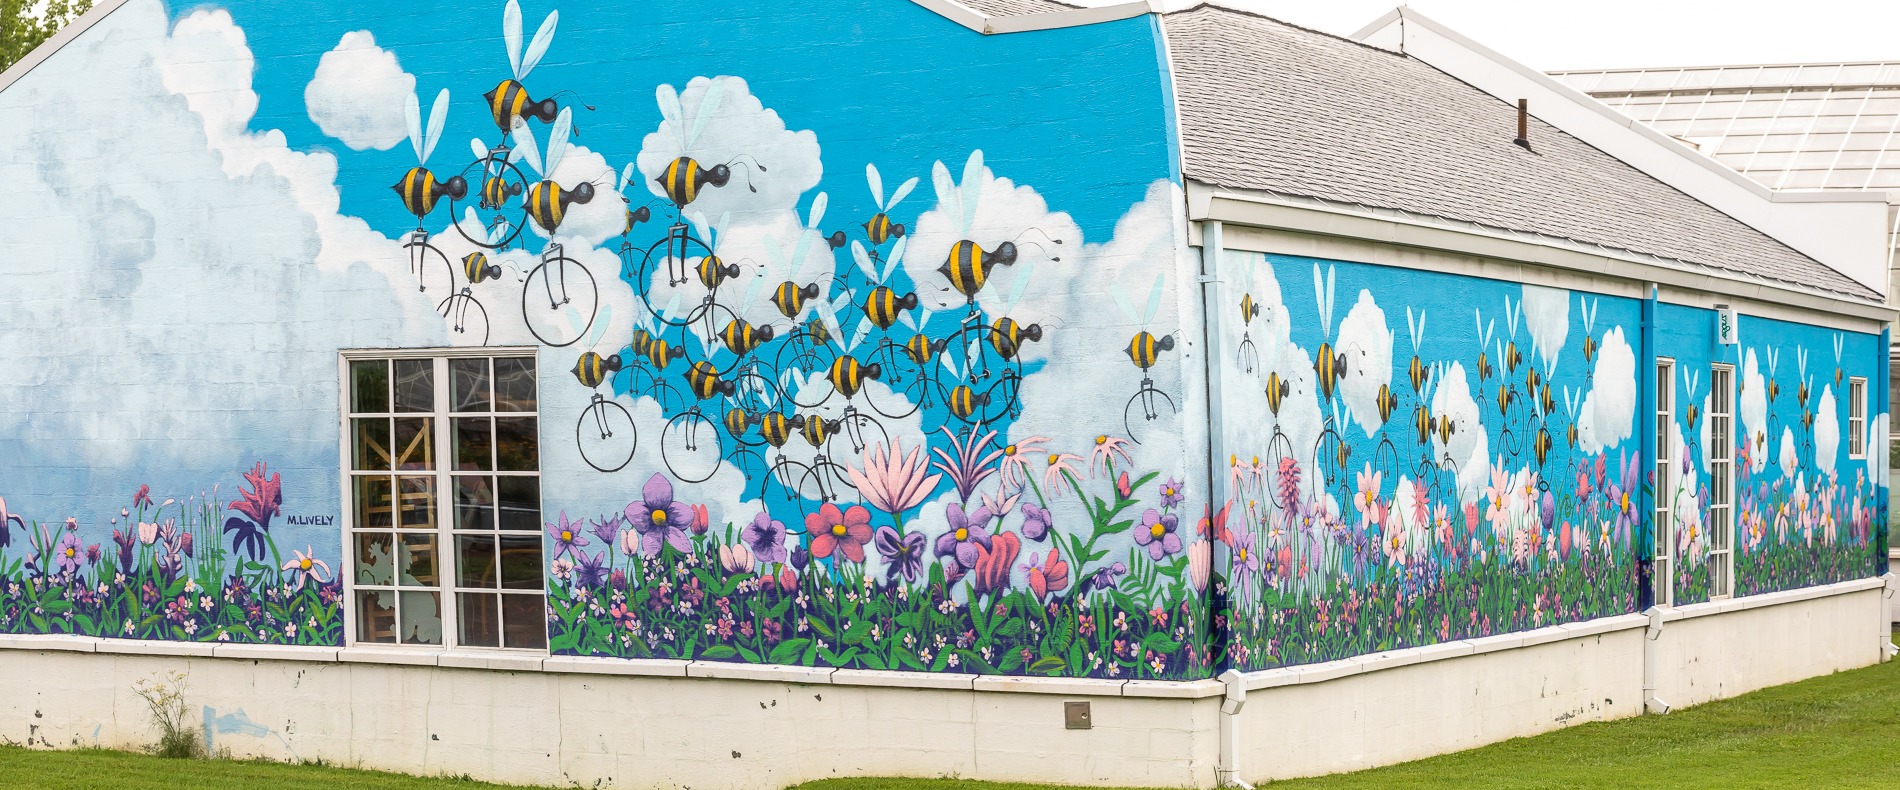 Beecycles Richmond mural by Matt Lively